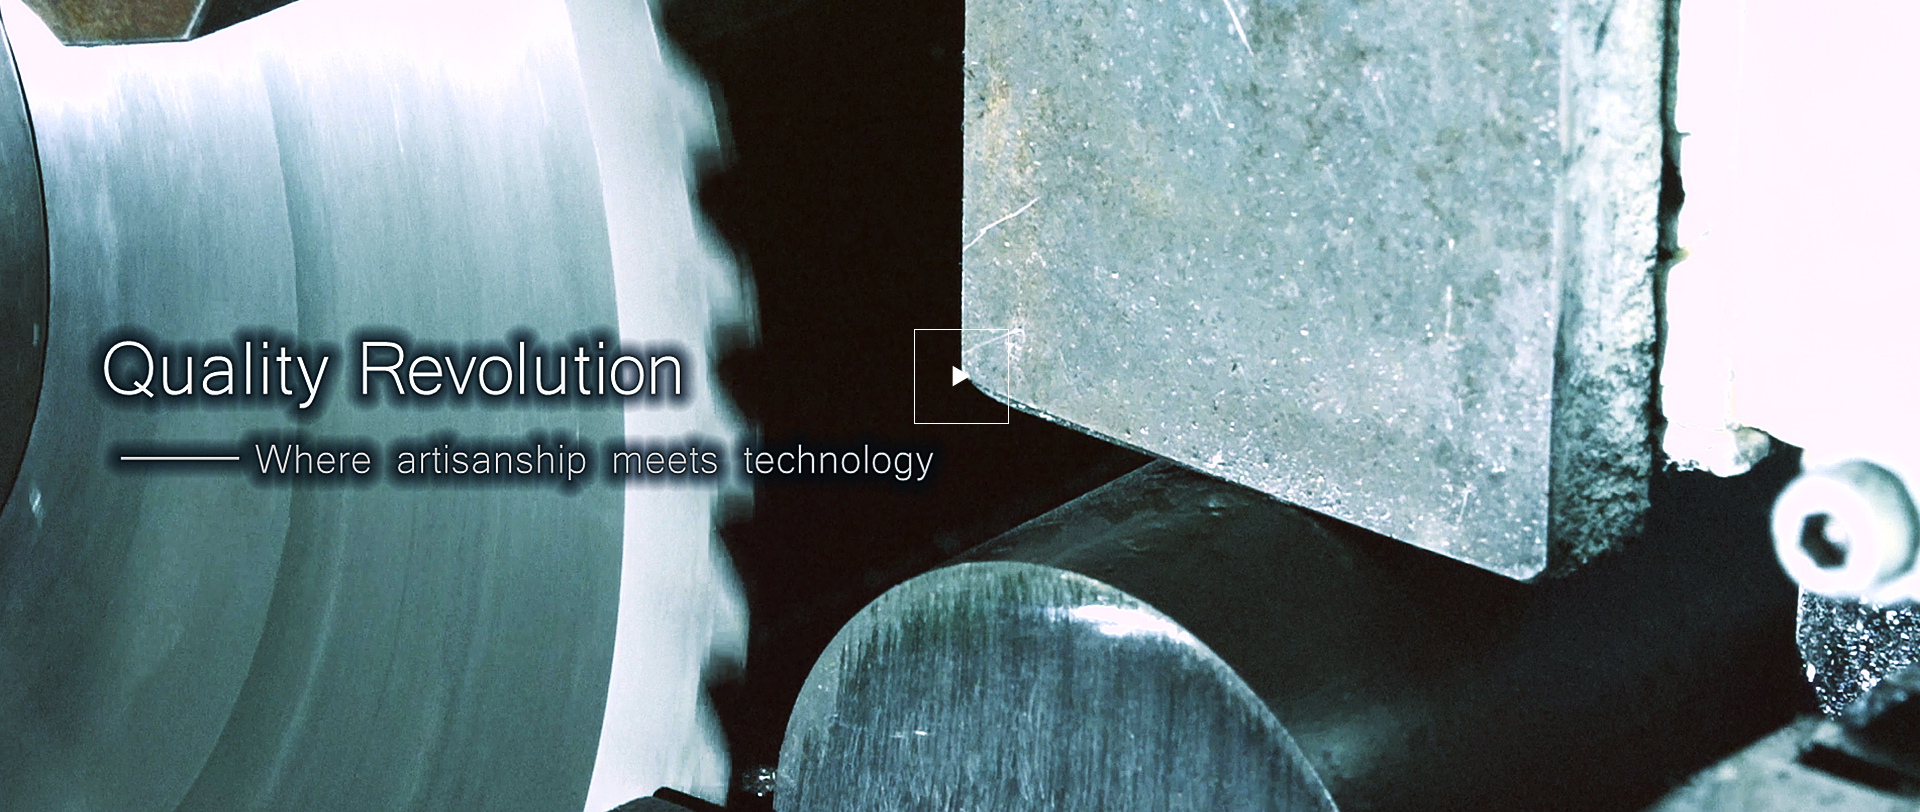 Quality Revolution――― Where artisanship meets technology